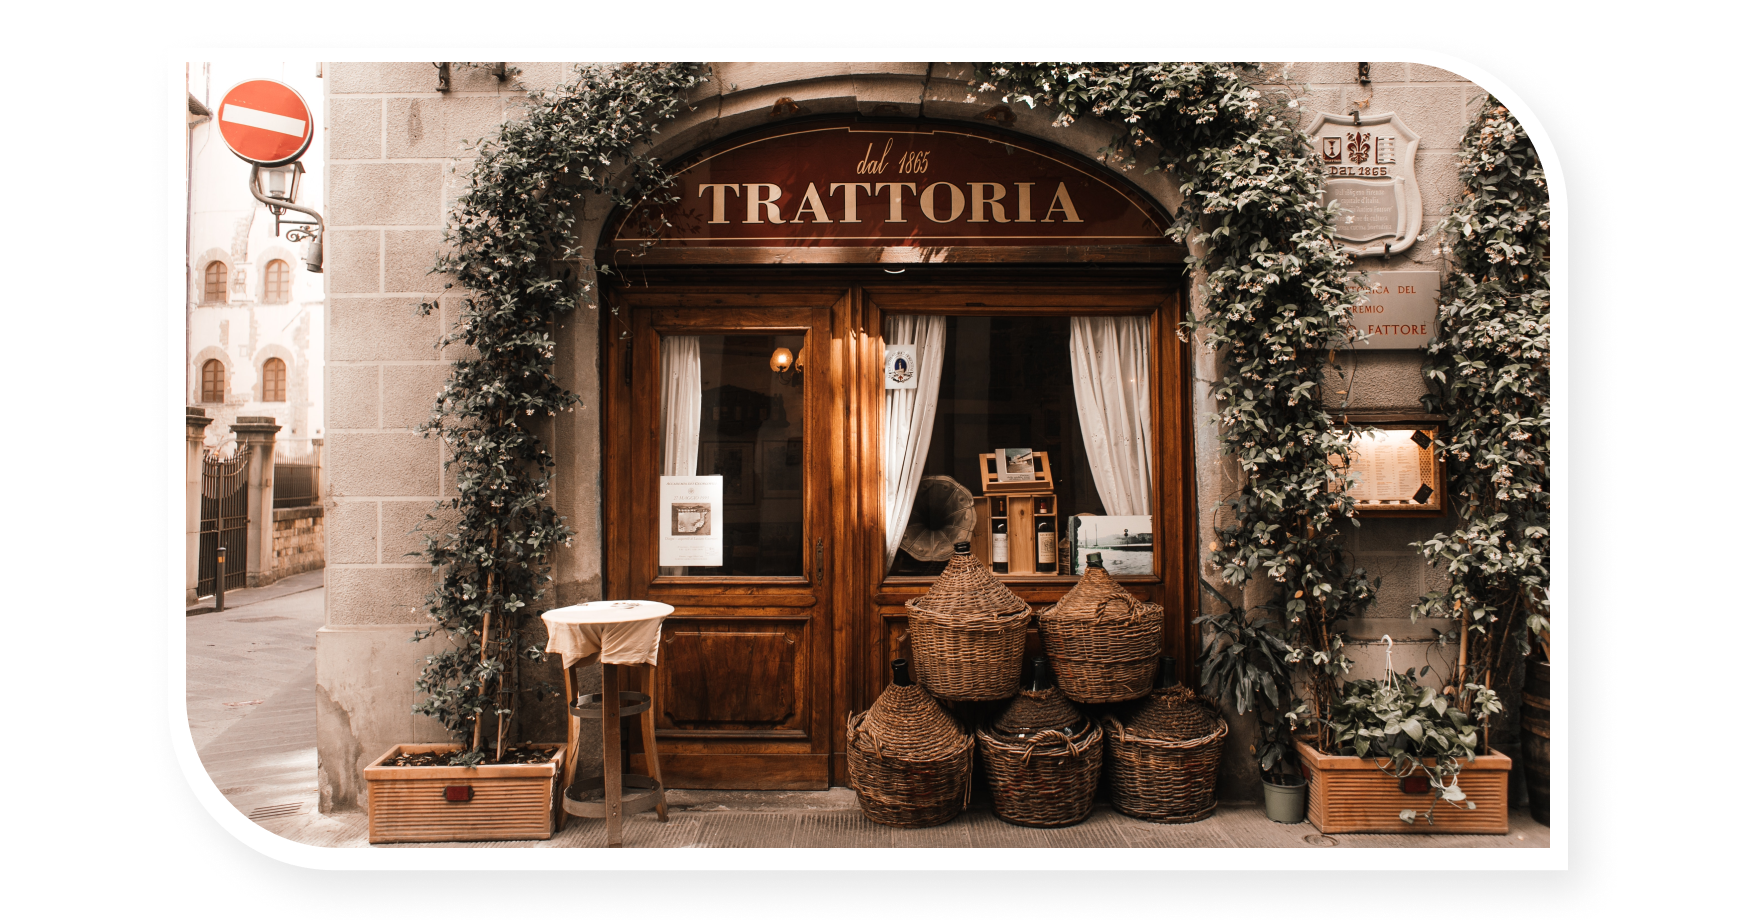 Trattoria - Small italian restaurant